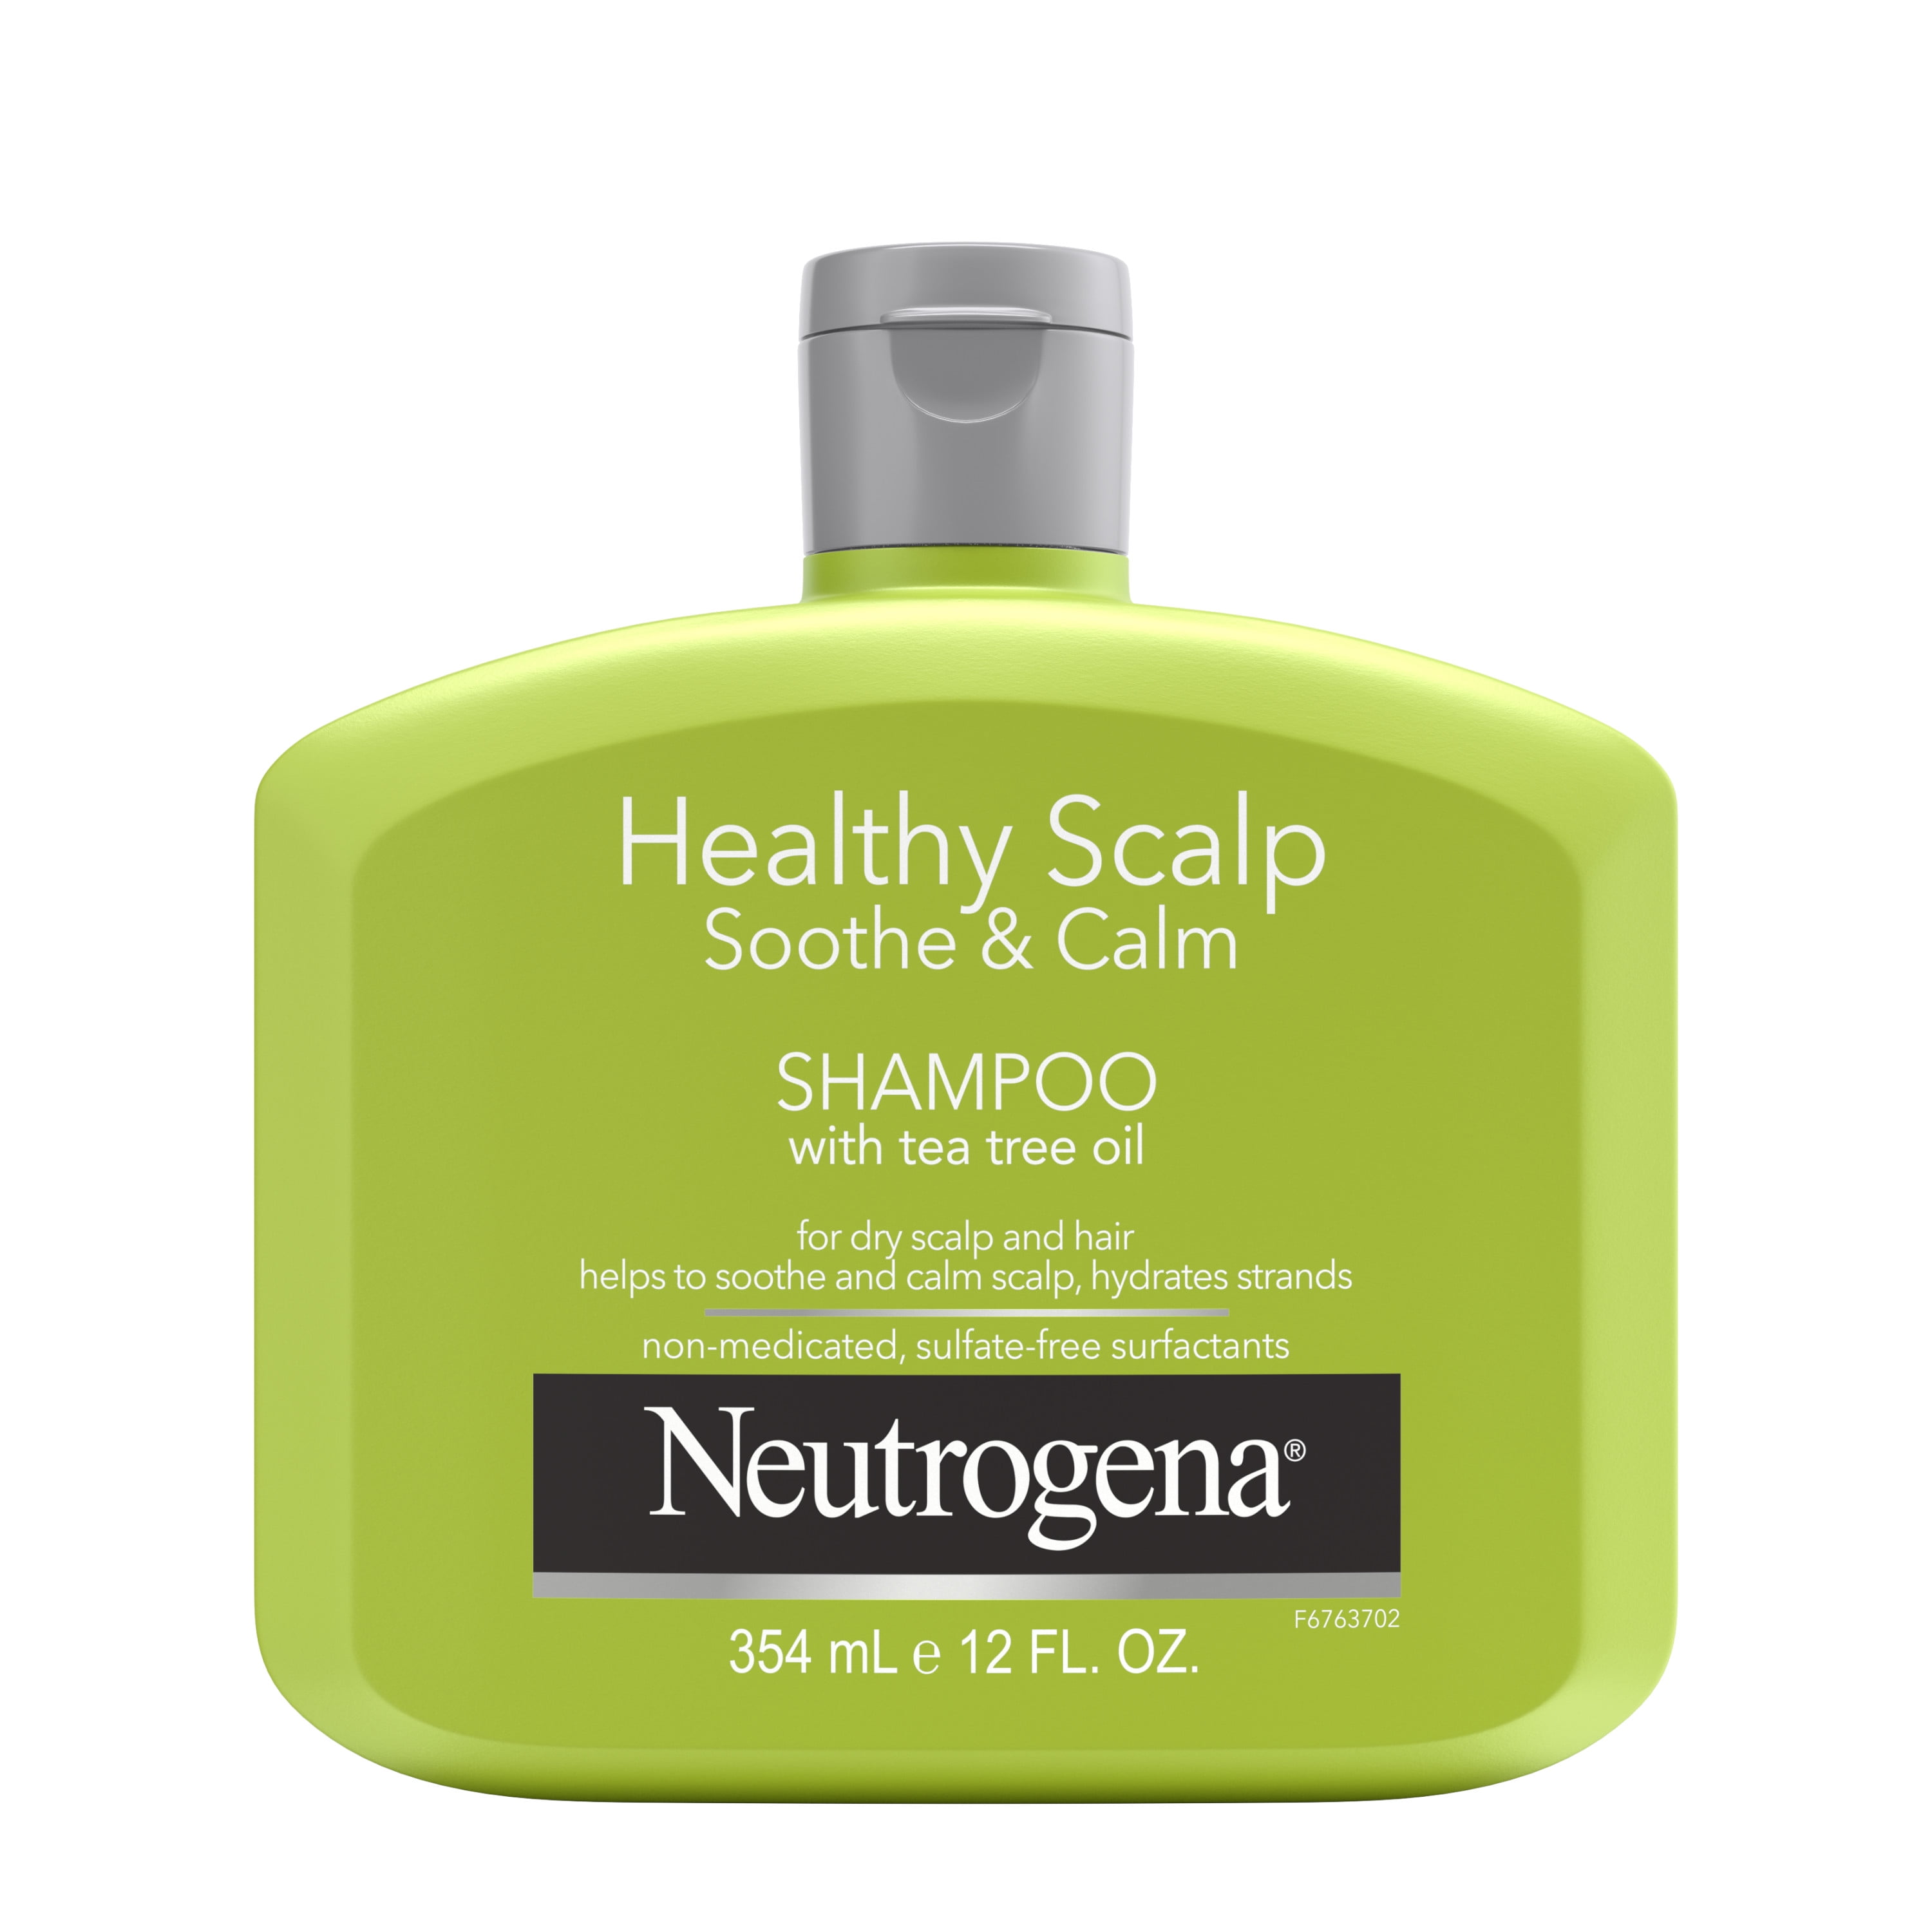 Neutrogena Tree Oil Shampoo to Refresh & Moisturize Dry Scalp & Hair, Healthy Scalp Soothe Calm, Sulfate-Free Surfactants, Color-Safe, 12 fl oz Walmart.com